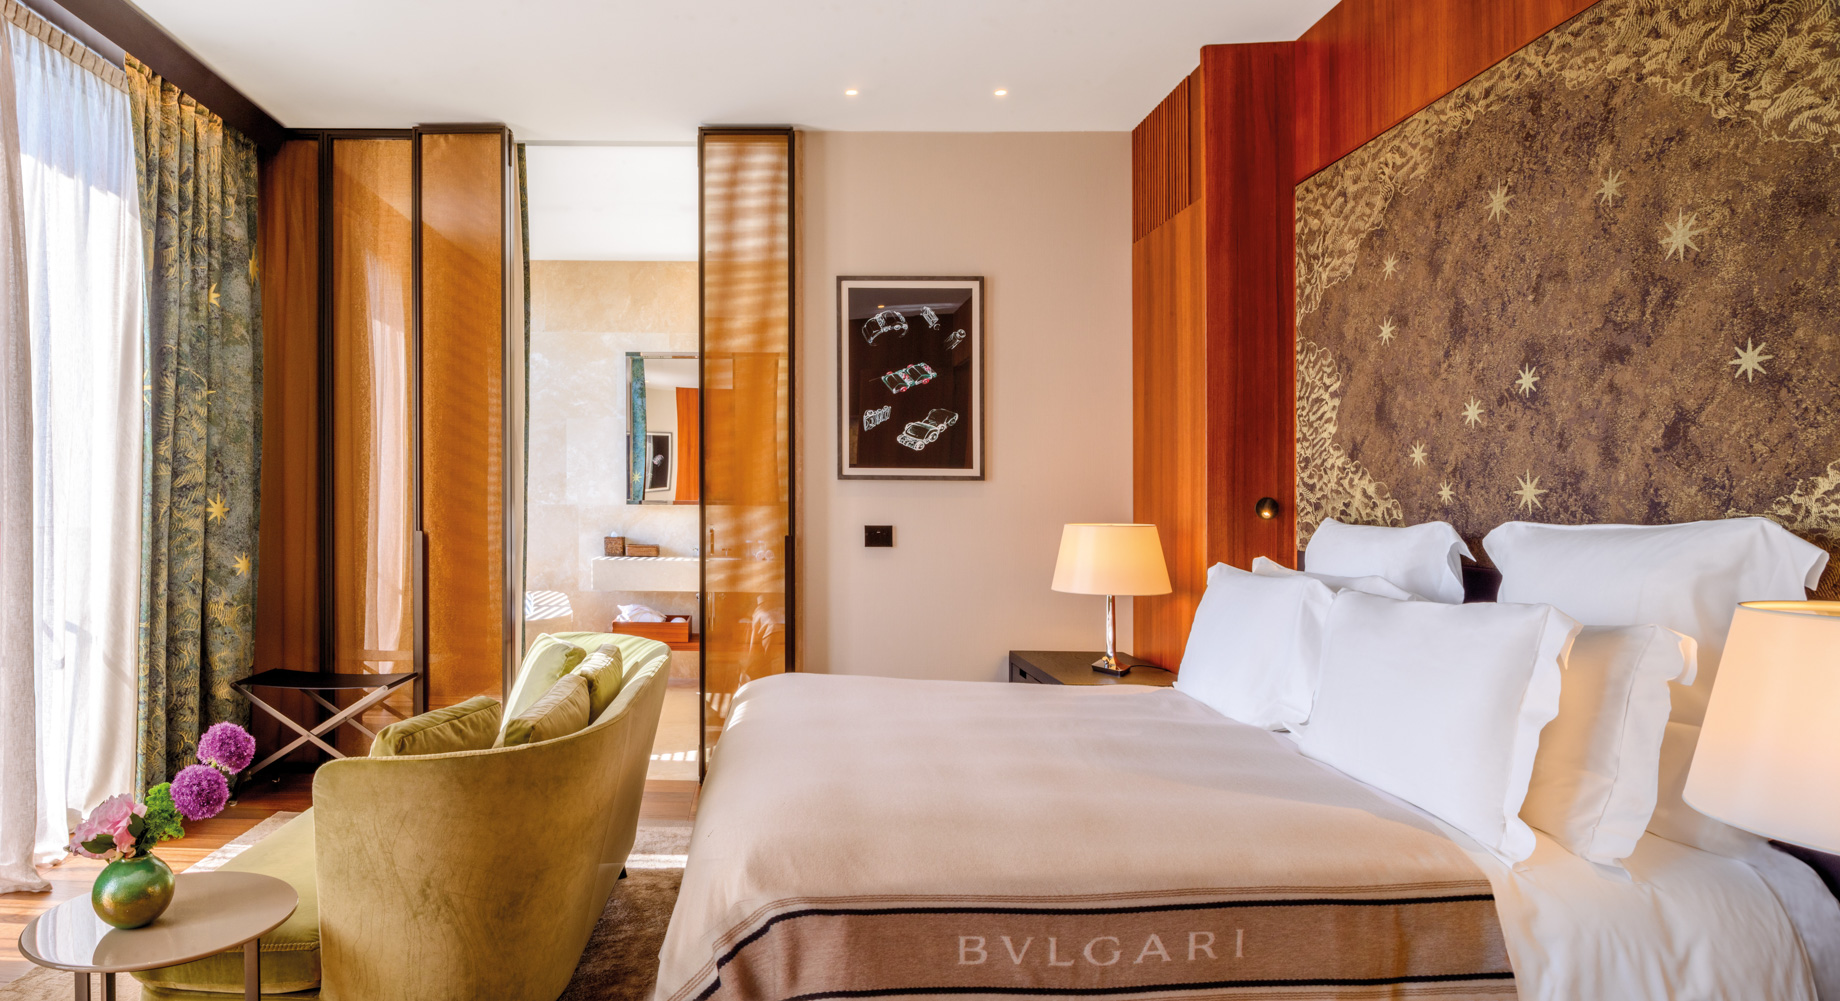 Bvlgari Hotel Milano – Milan, Italy – Bvlgari Suite Bedroom